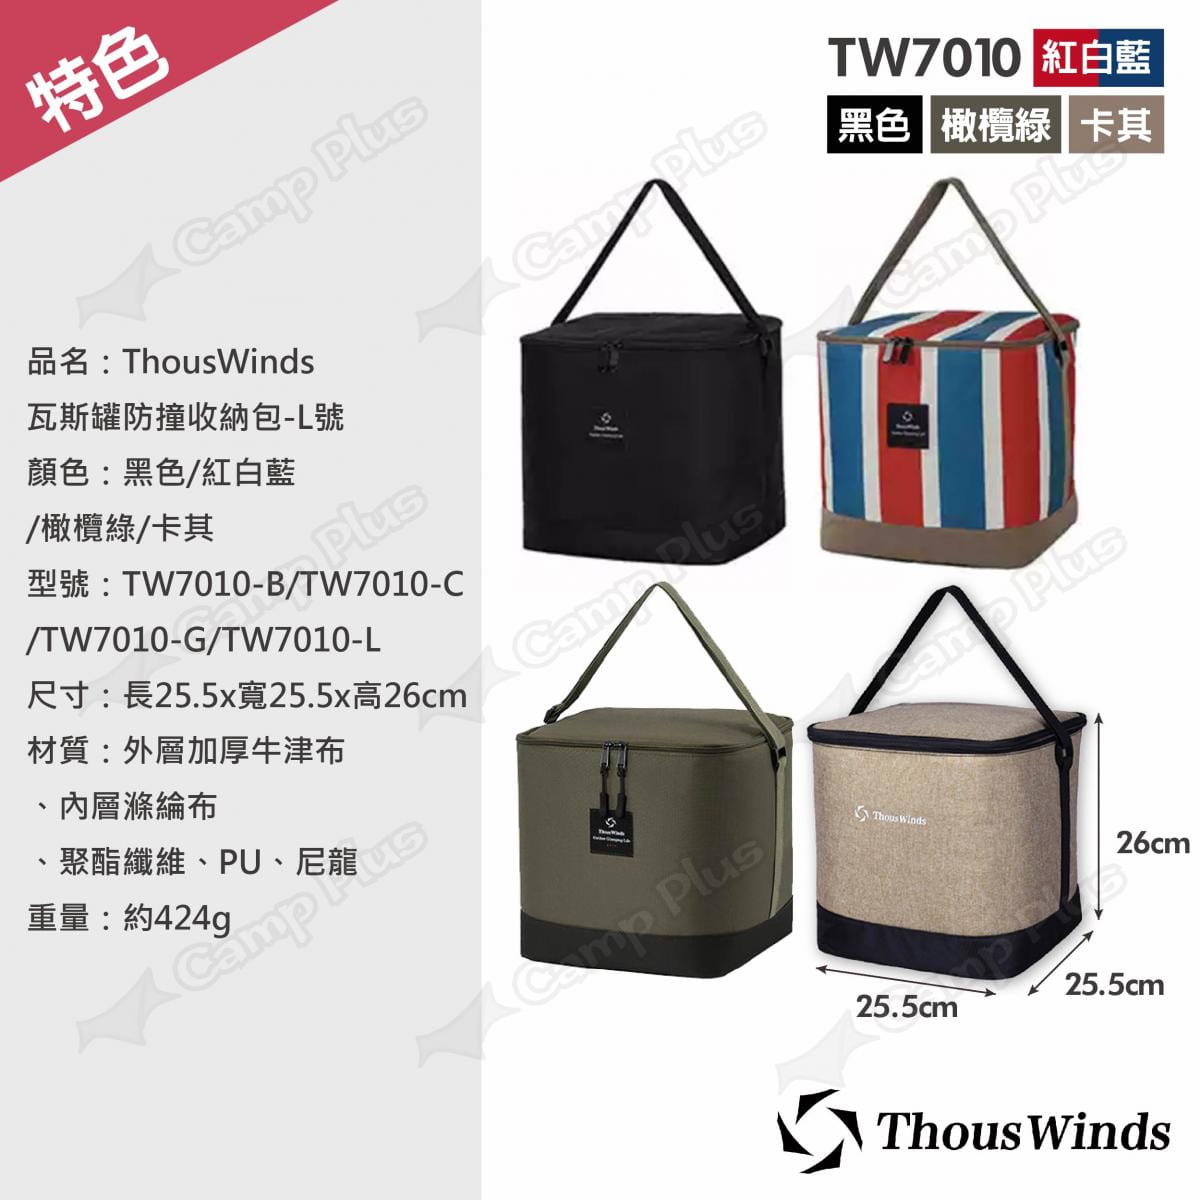 【Thous Winds】瓦斯罐防撞收納包-L 紅白藍 TW7010-C 悠遊戶外 7